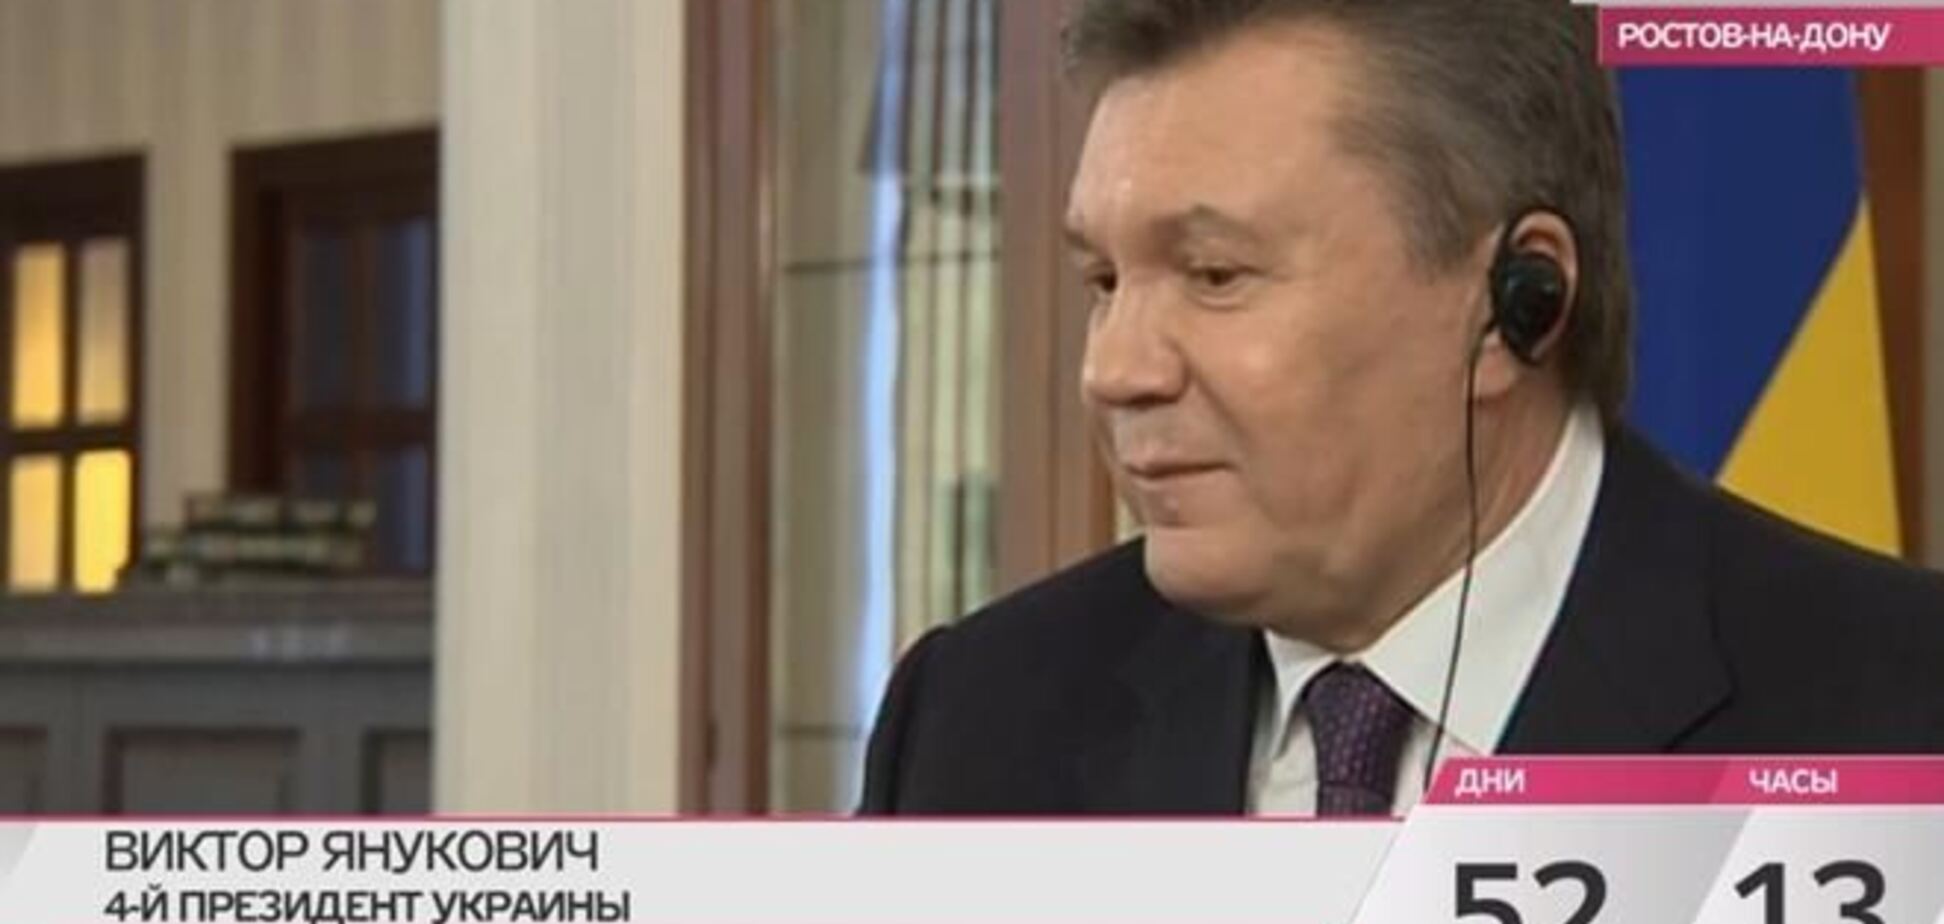 Янукович: я никогда не давал указаний стрелять